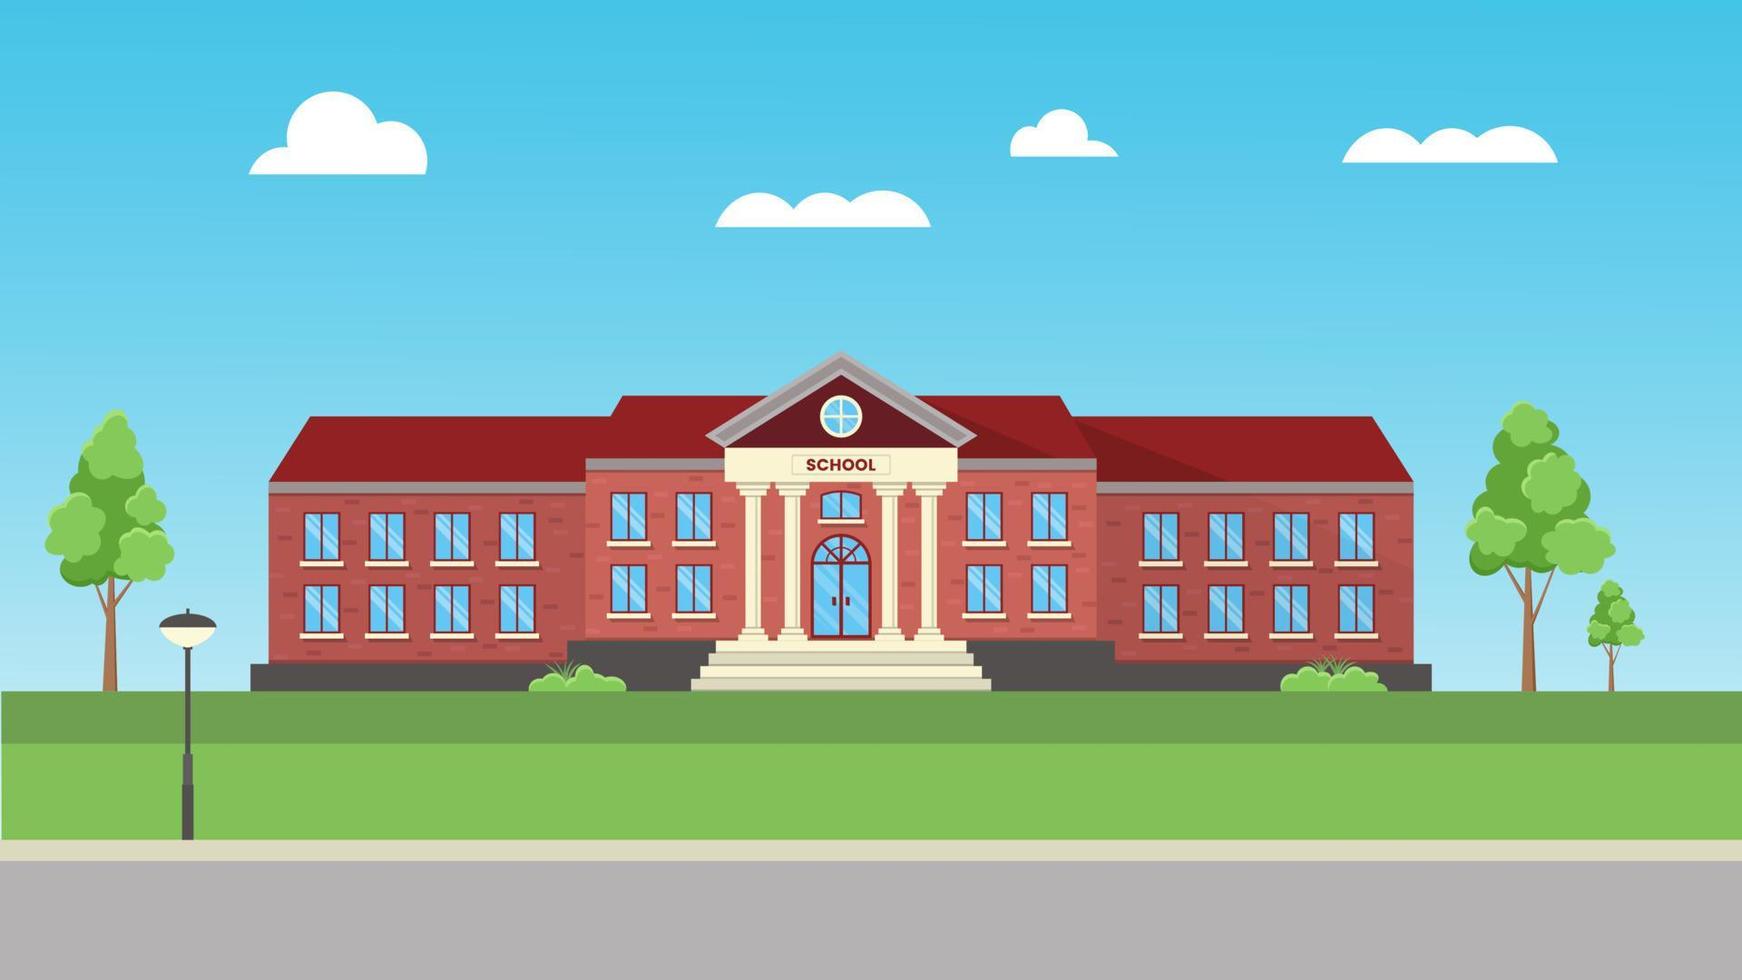 Schulgebäude im flachen Stil, Vektorillustration mit klarem blauem Himmel vektor